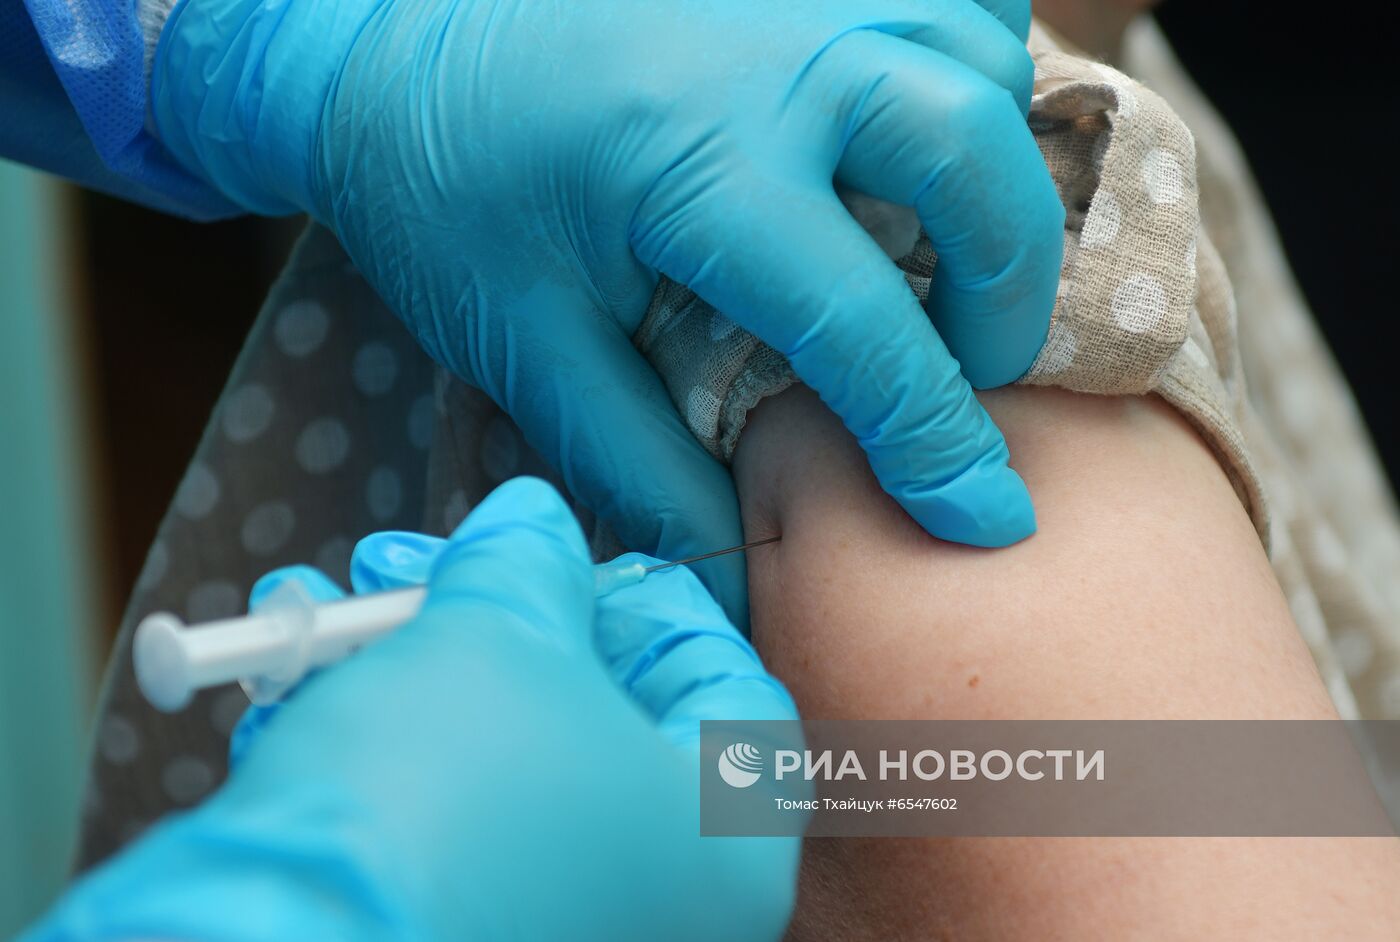 Вакцинация препаратом Sputnik V в Абхазии